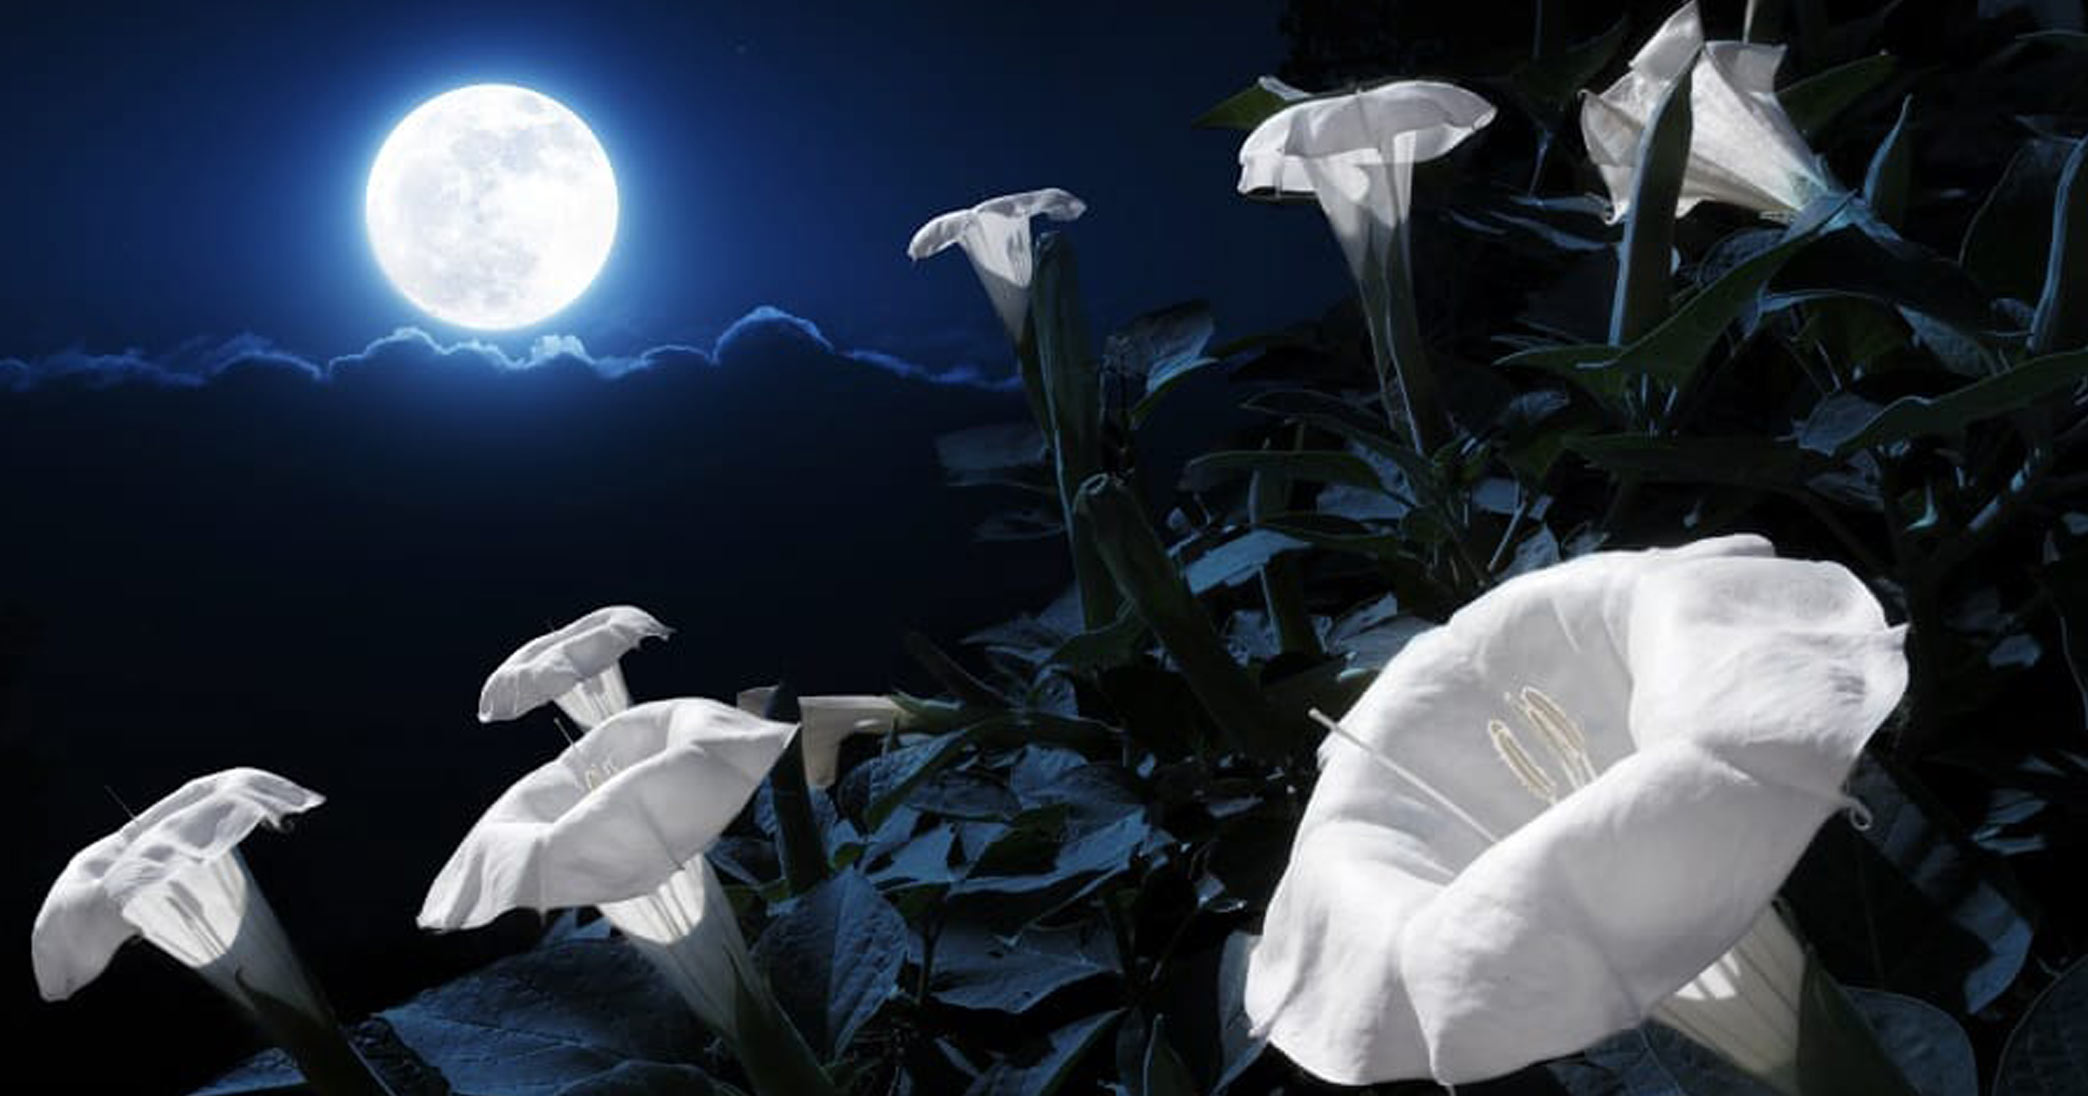 20 night flowers for moon garden